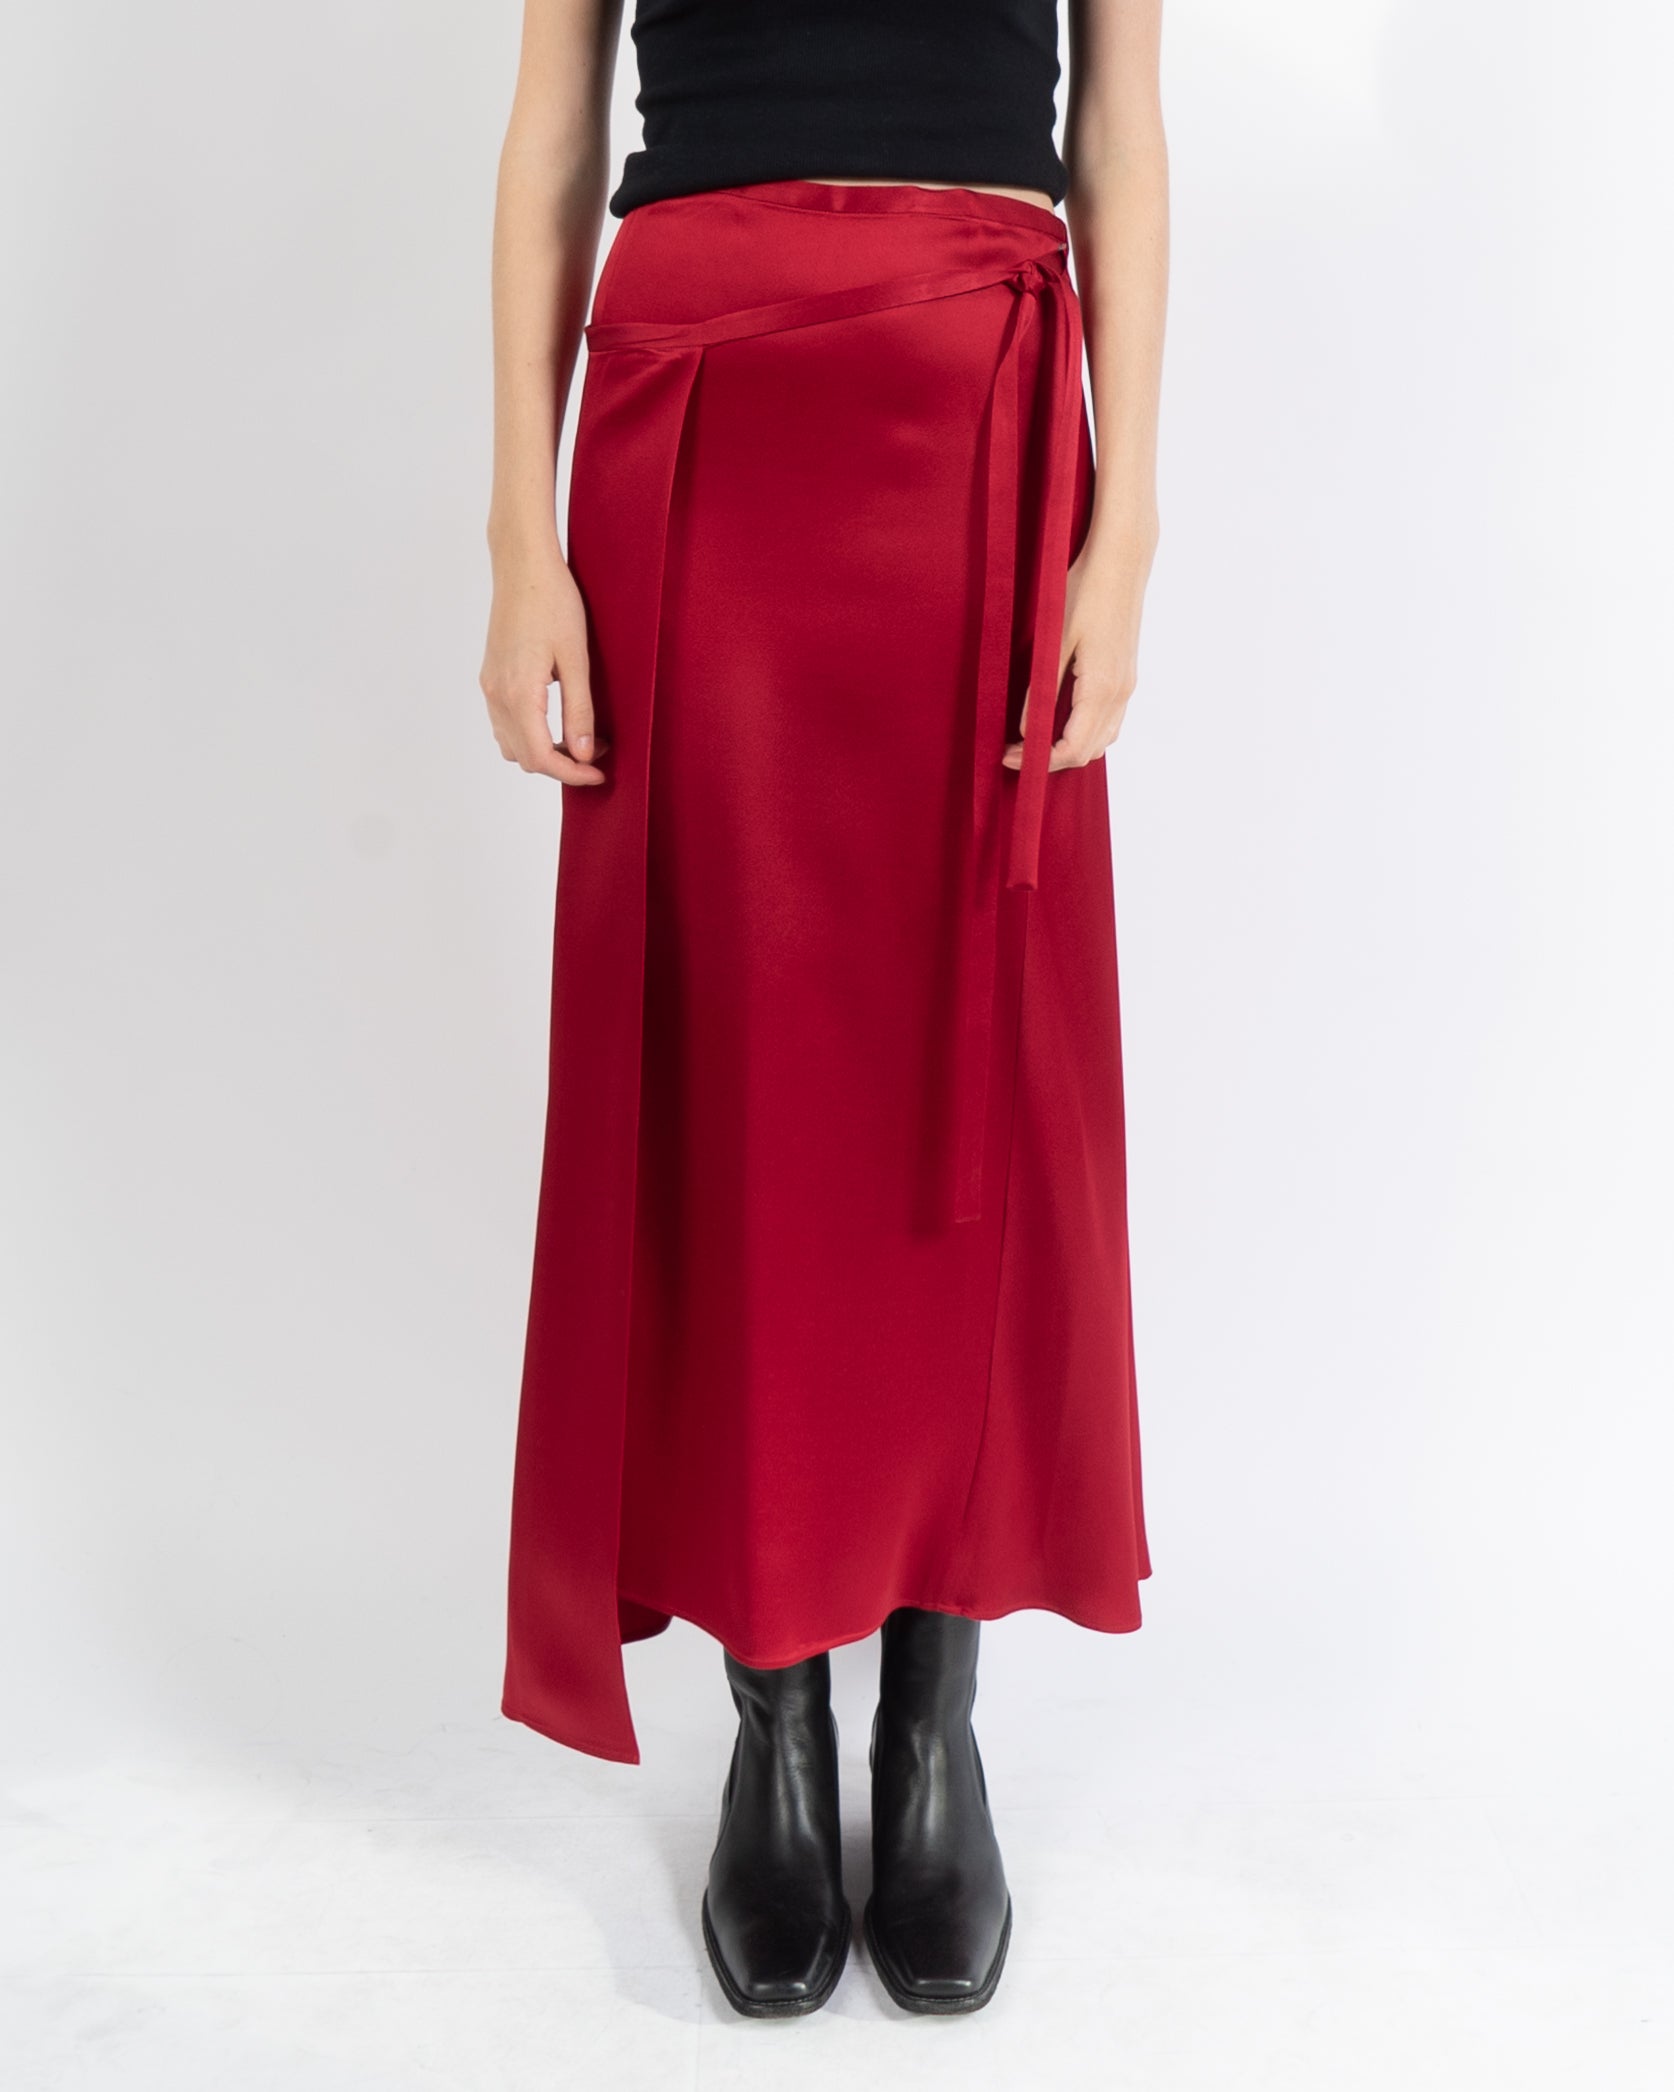 SS18 Red Satin Skirt